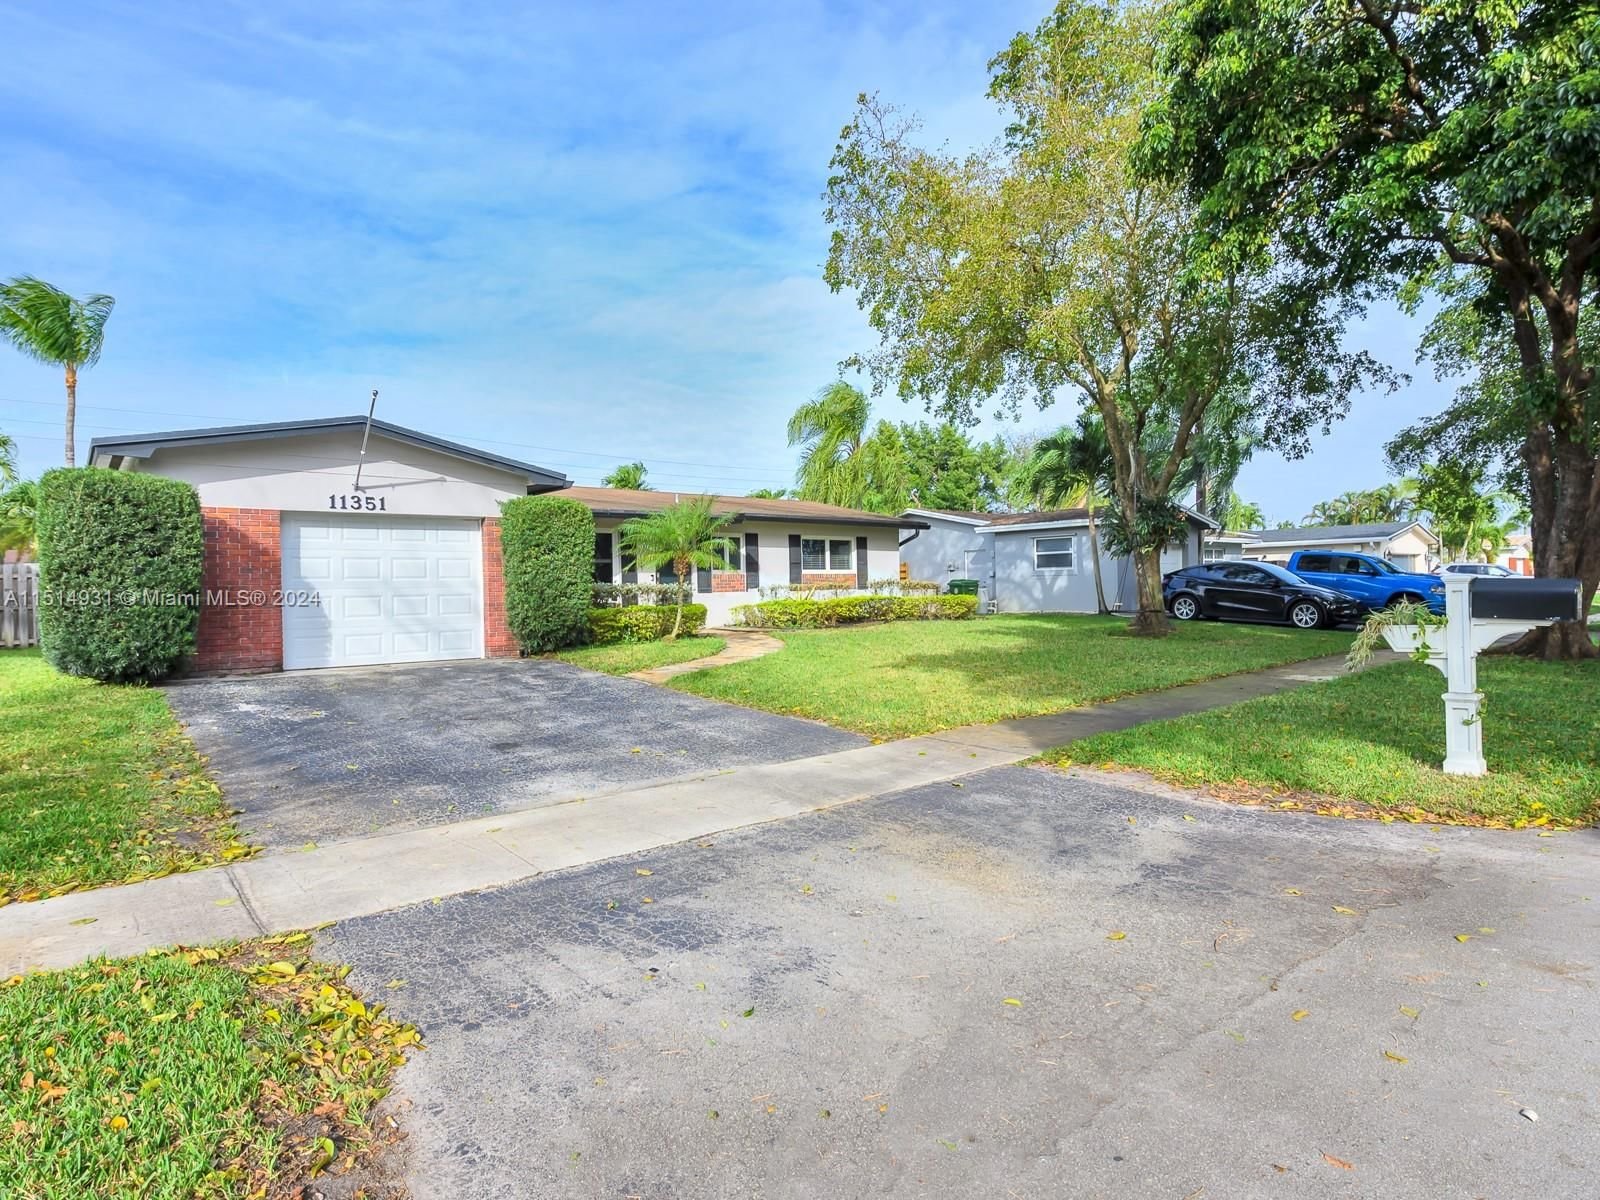 Real estate property located at 11351 23rd St, Broward County, PEMBROKE LAKES SEC 4, Pembroke Pines, FL